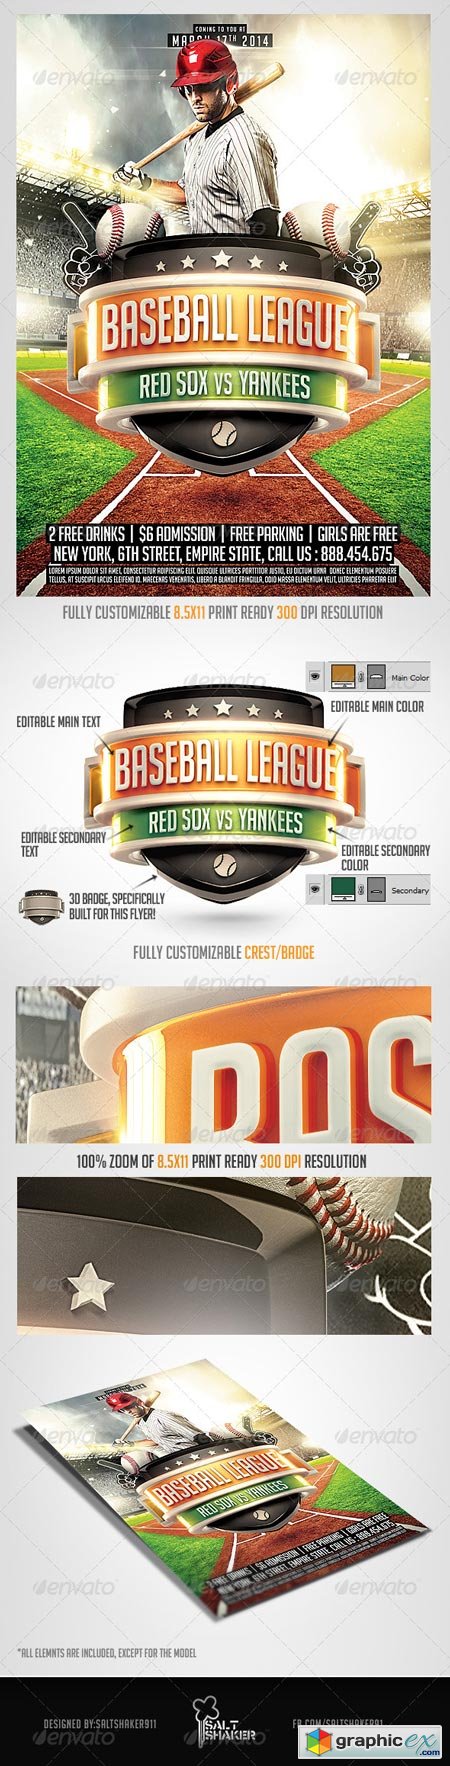 Baseball League Flyer Template 7104401